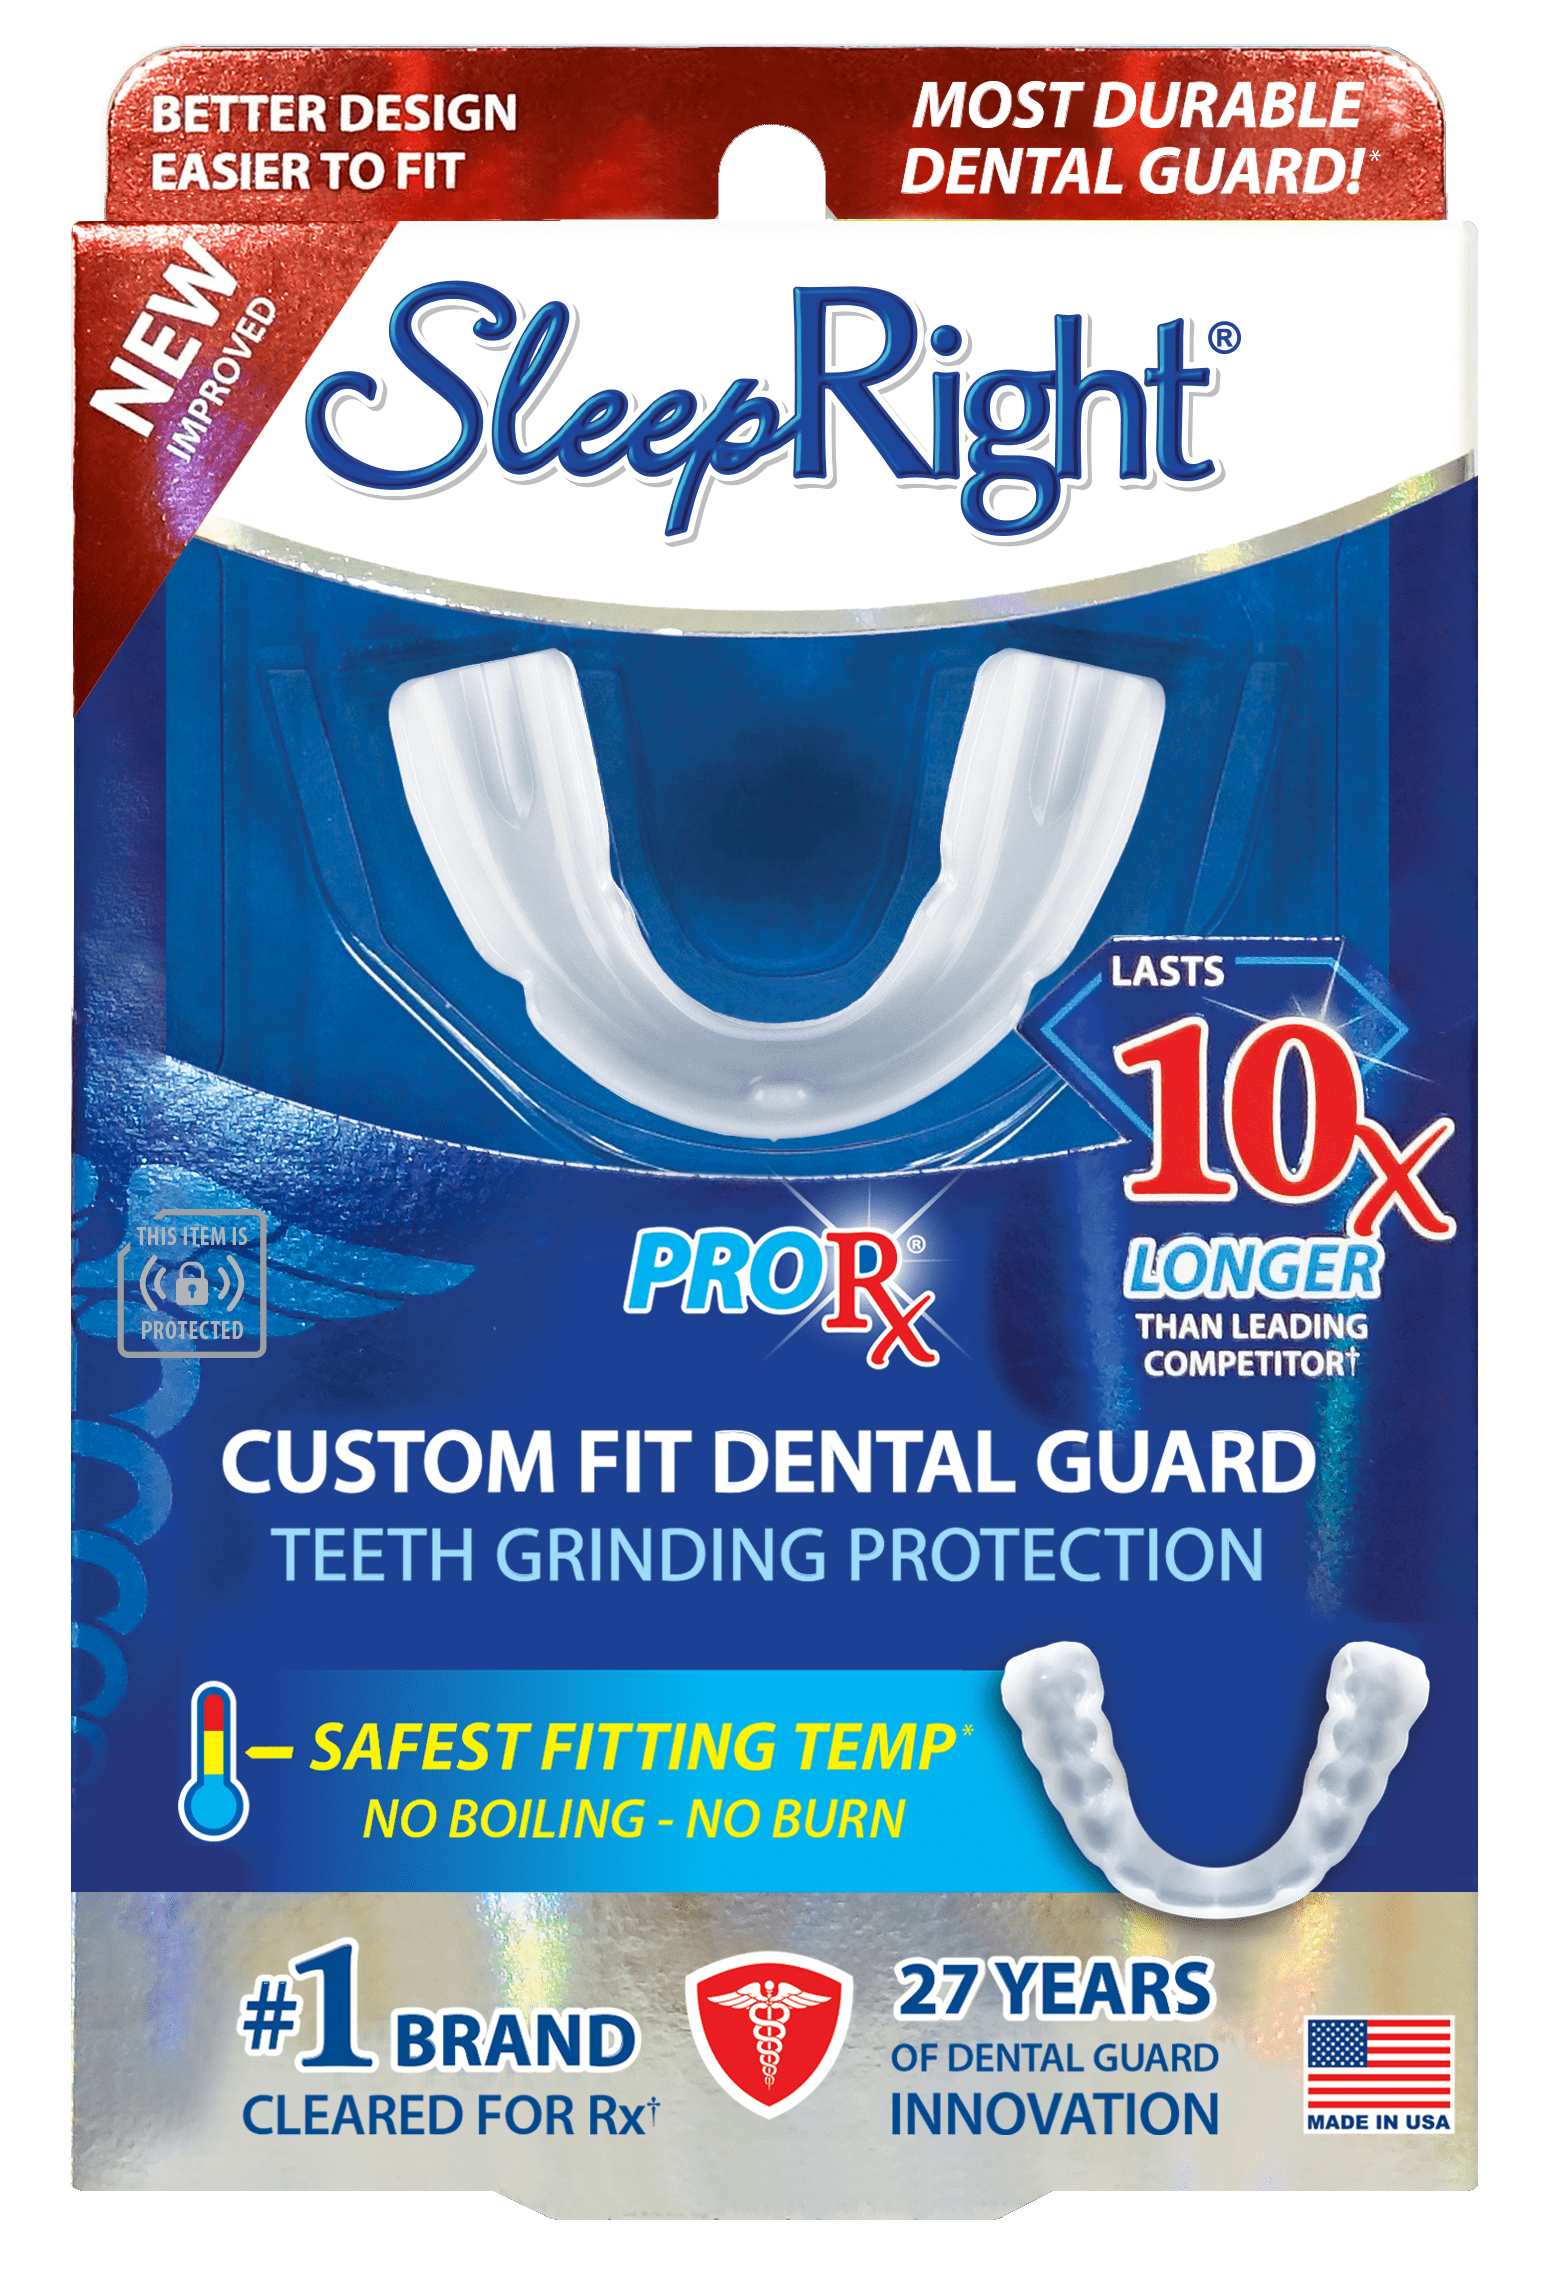 Lightweight Night Guard, Stops Bruxism, Moldable Dental Guard for Teeth  Grinding – KOHEEL